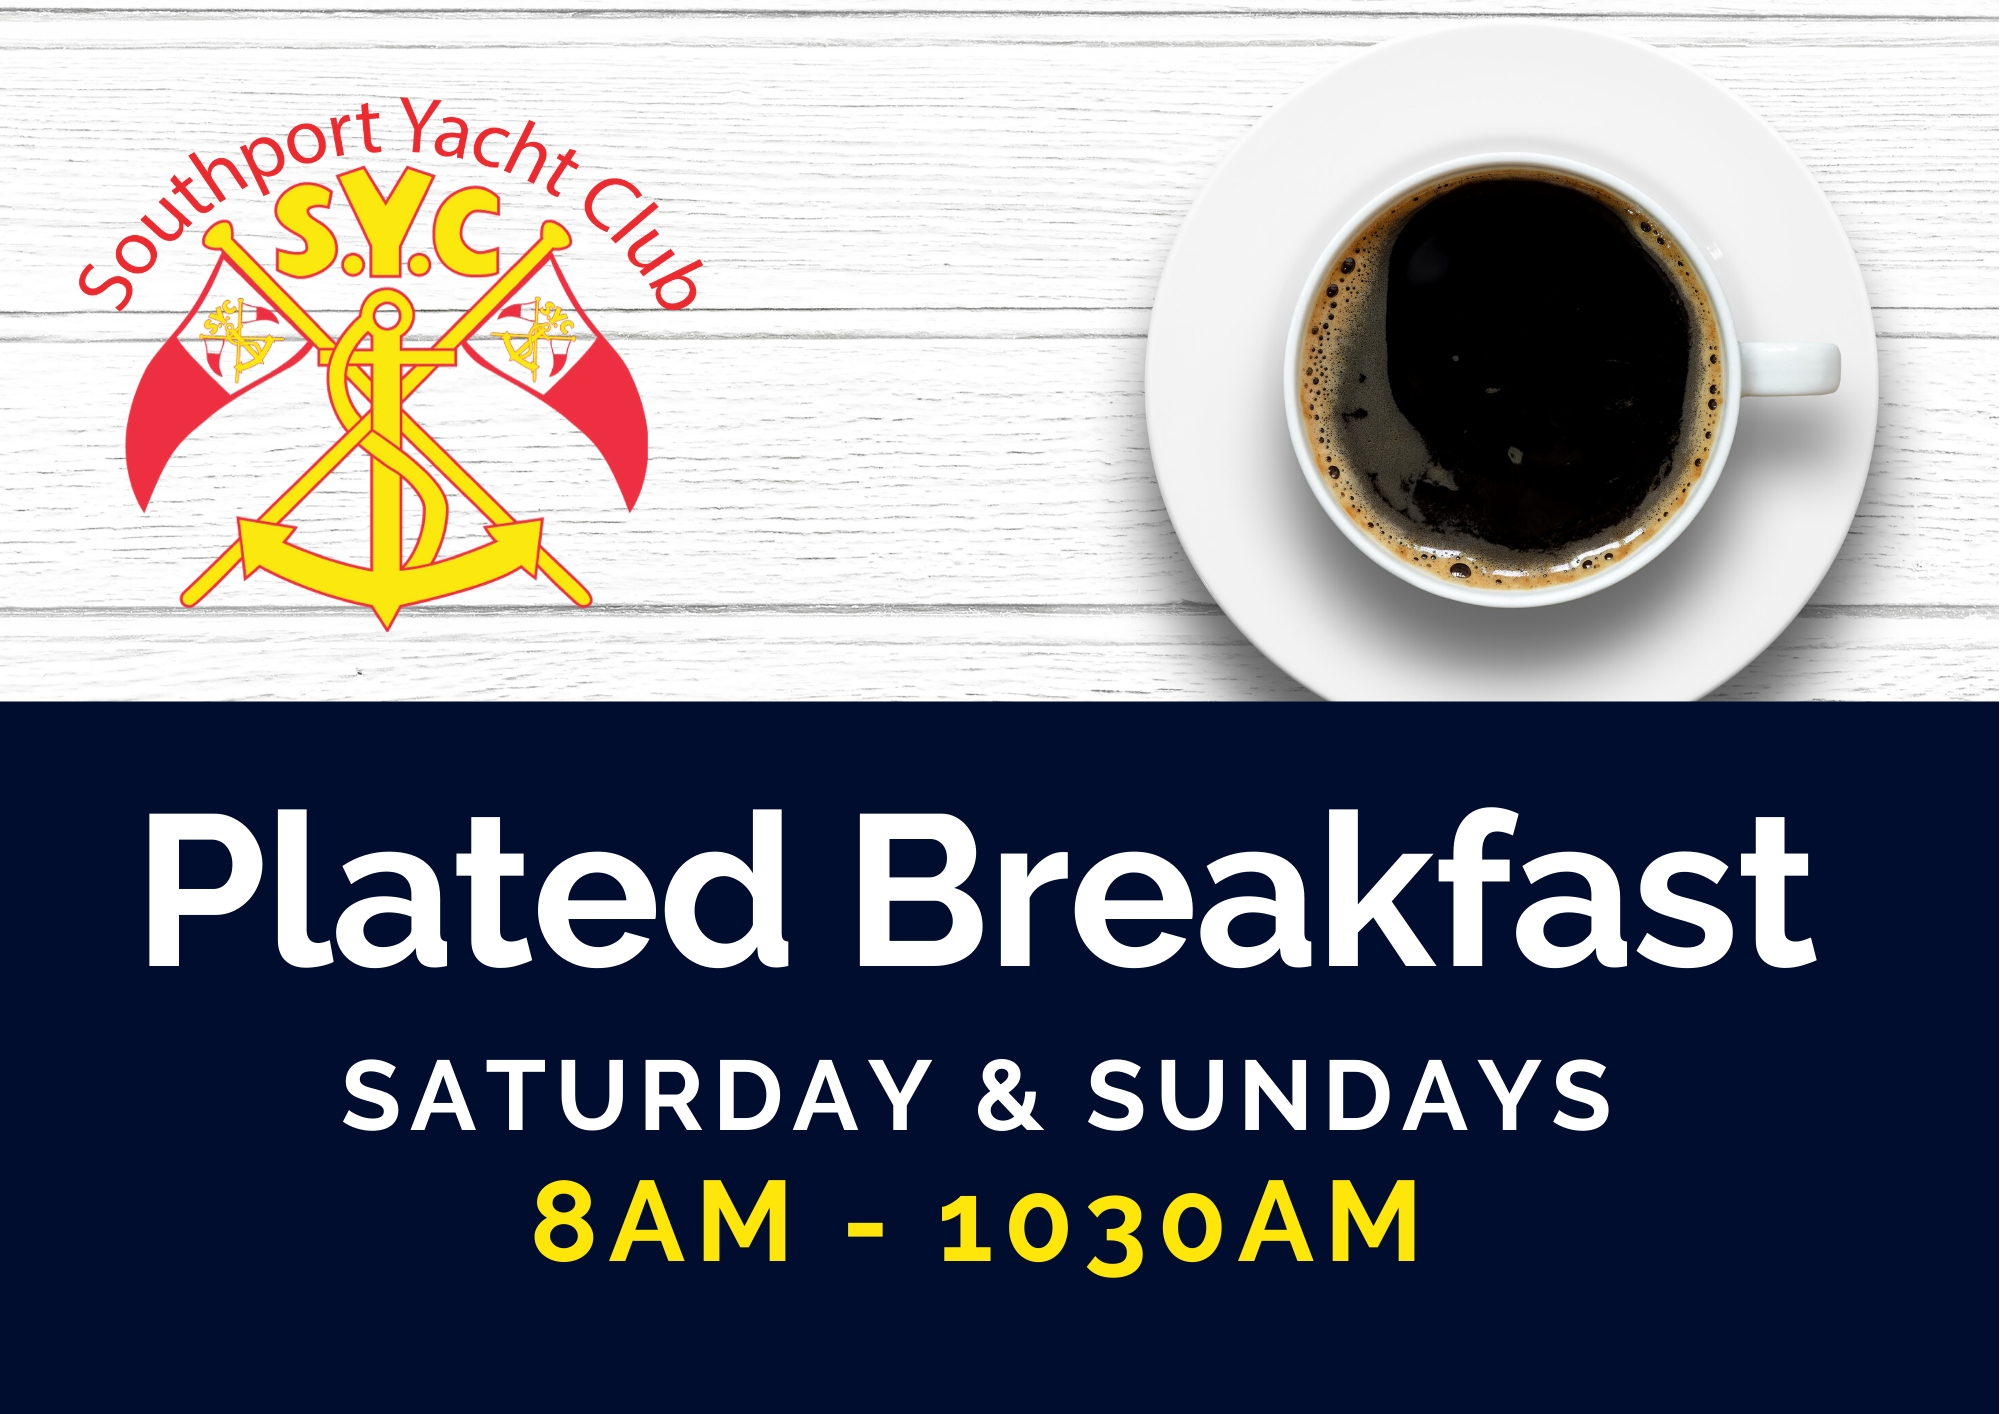 southport yacht club breakfast